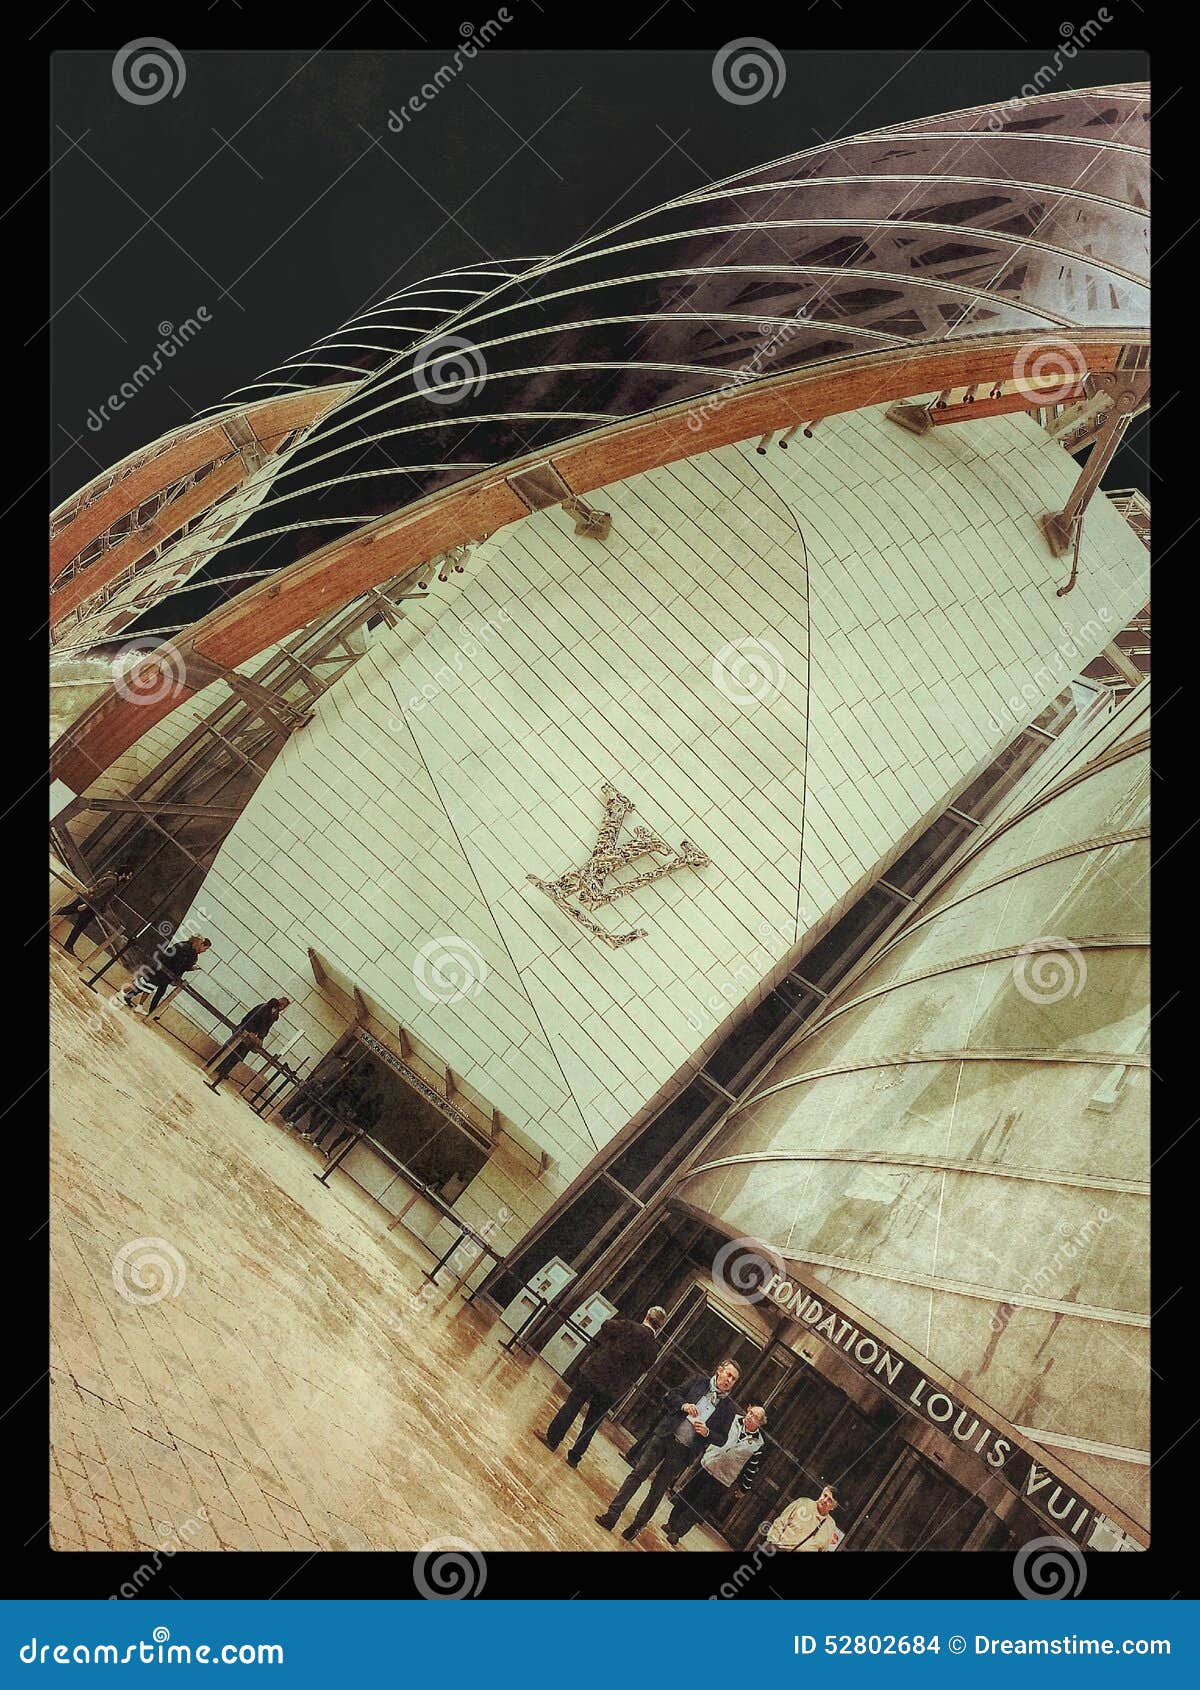 Foundation Louis Vuitton editorial stock image. Image of paris - 52802684